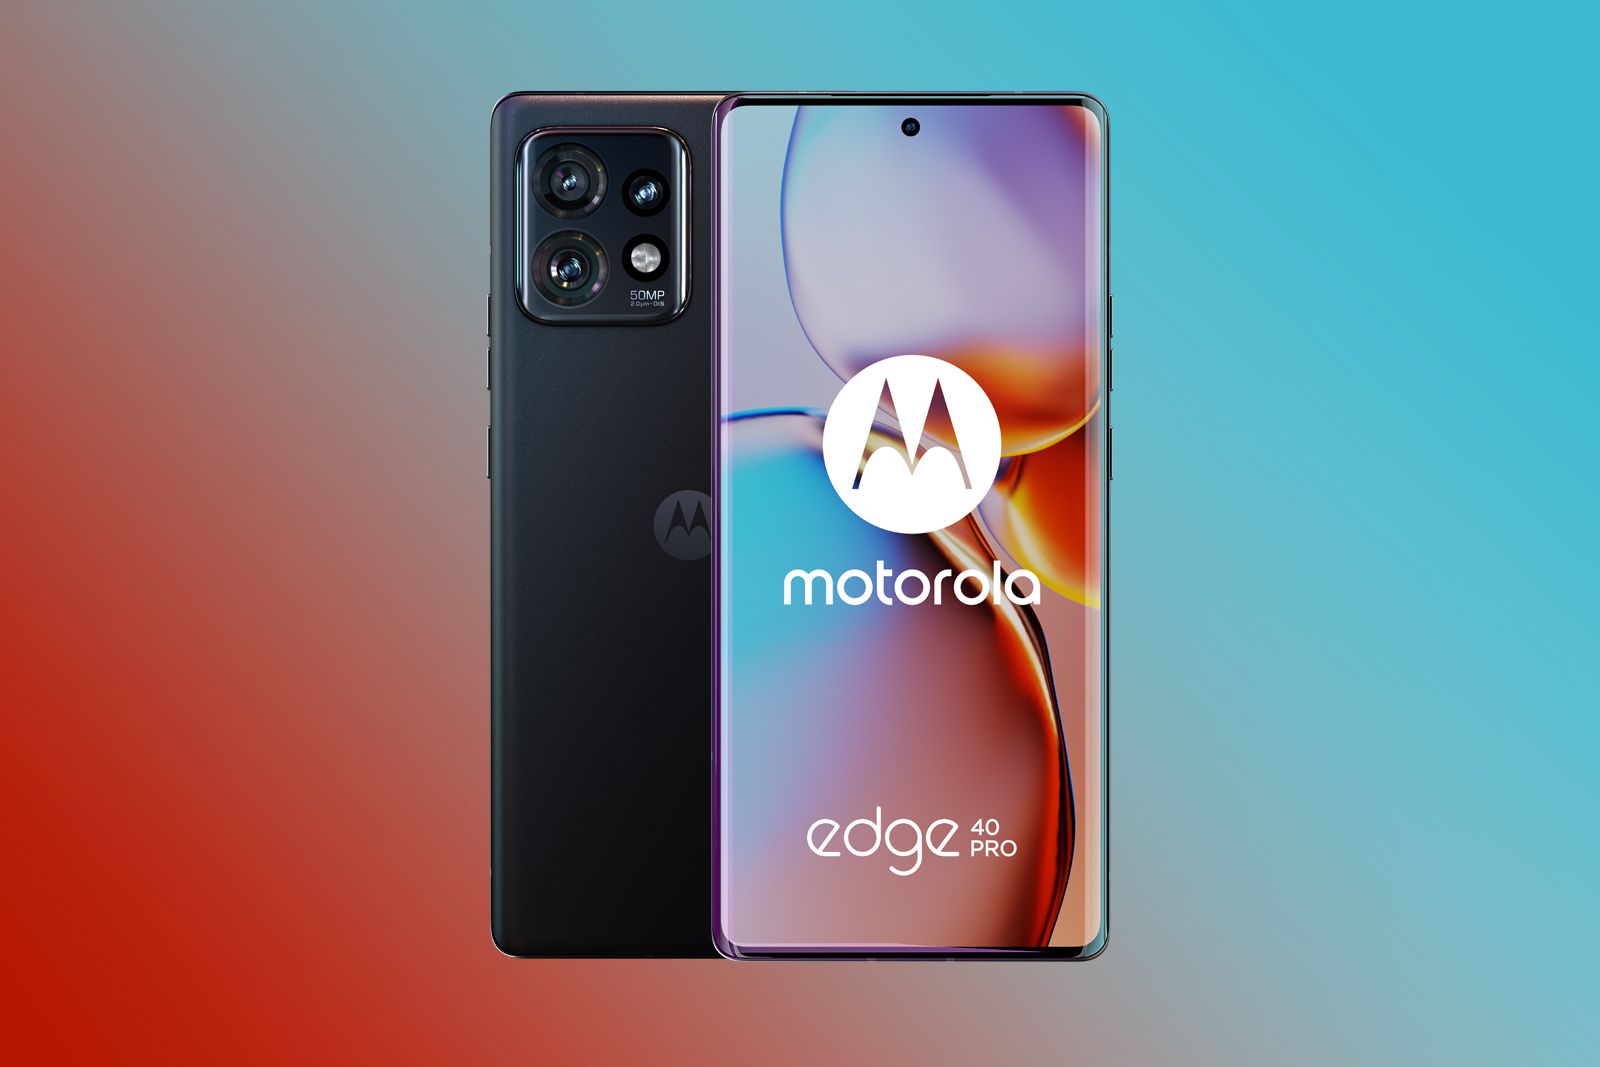 Motorola's Edge Lineup Expands with the New Motorola Edge 40